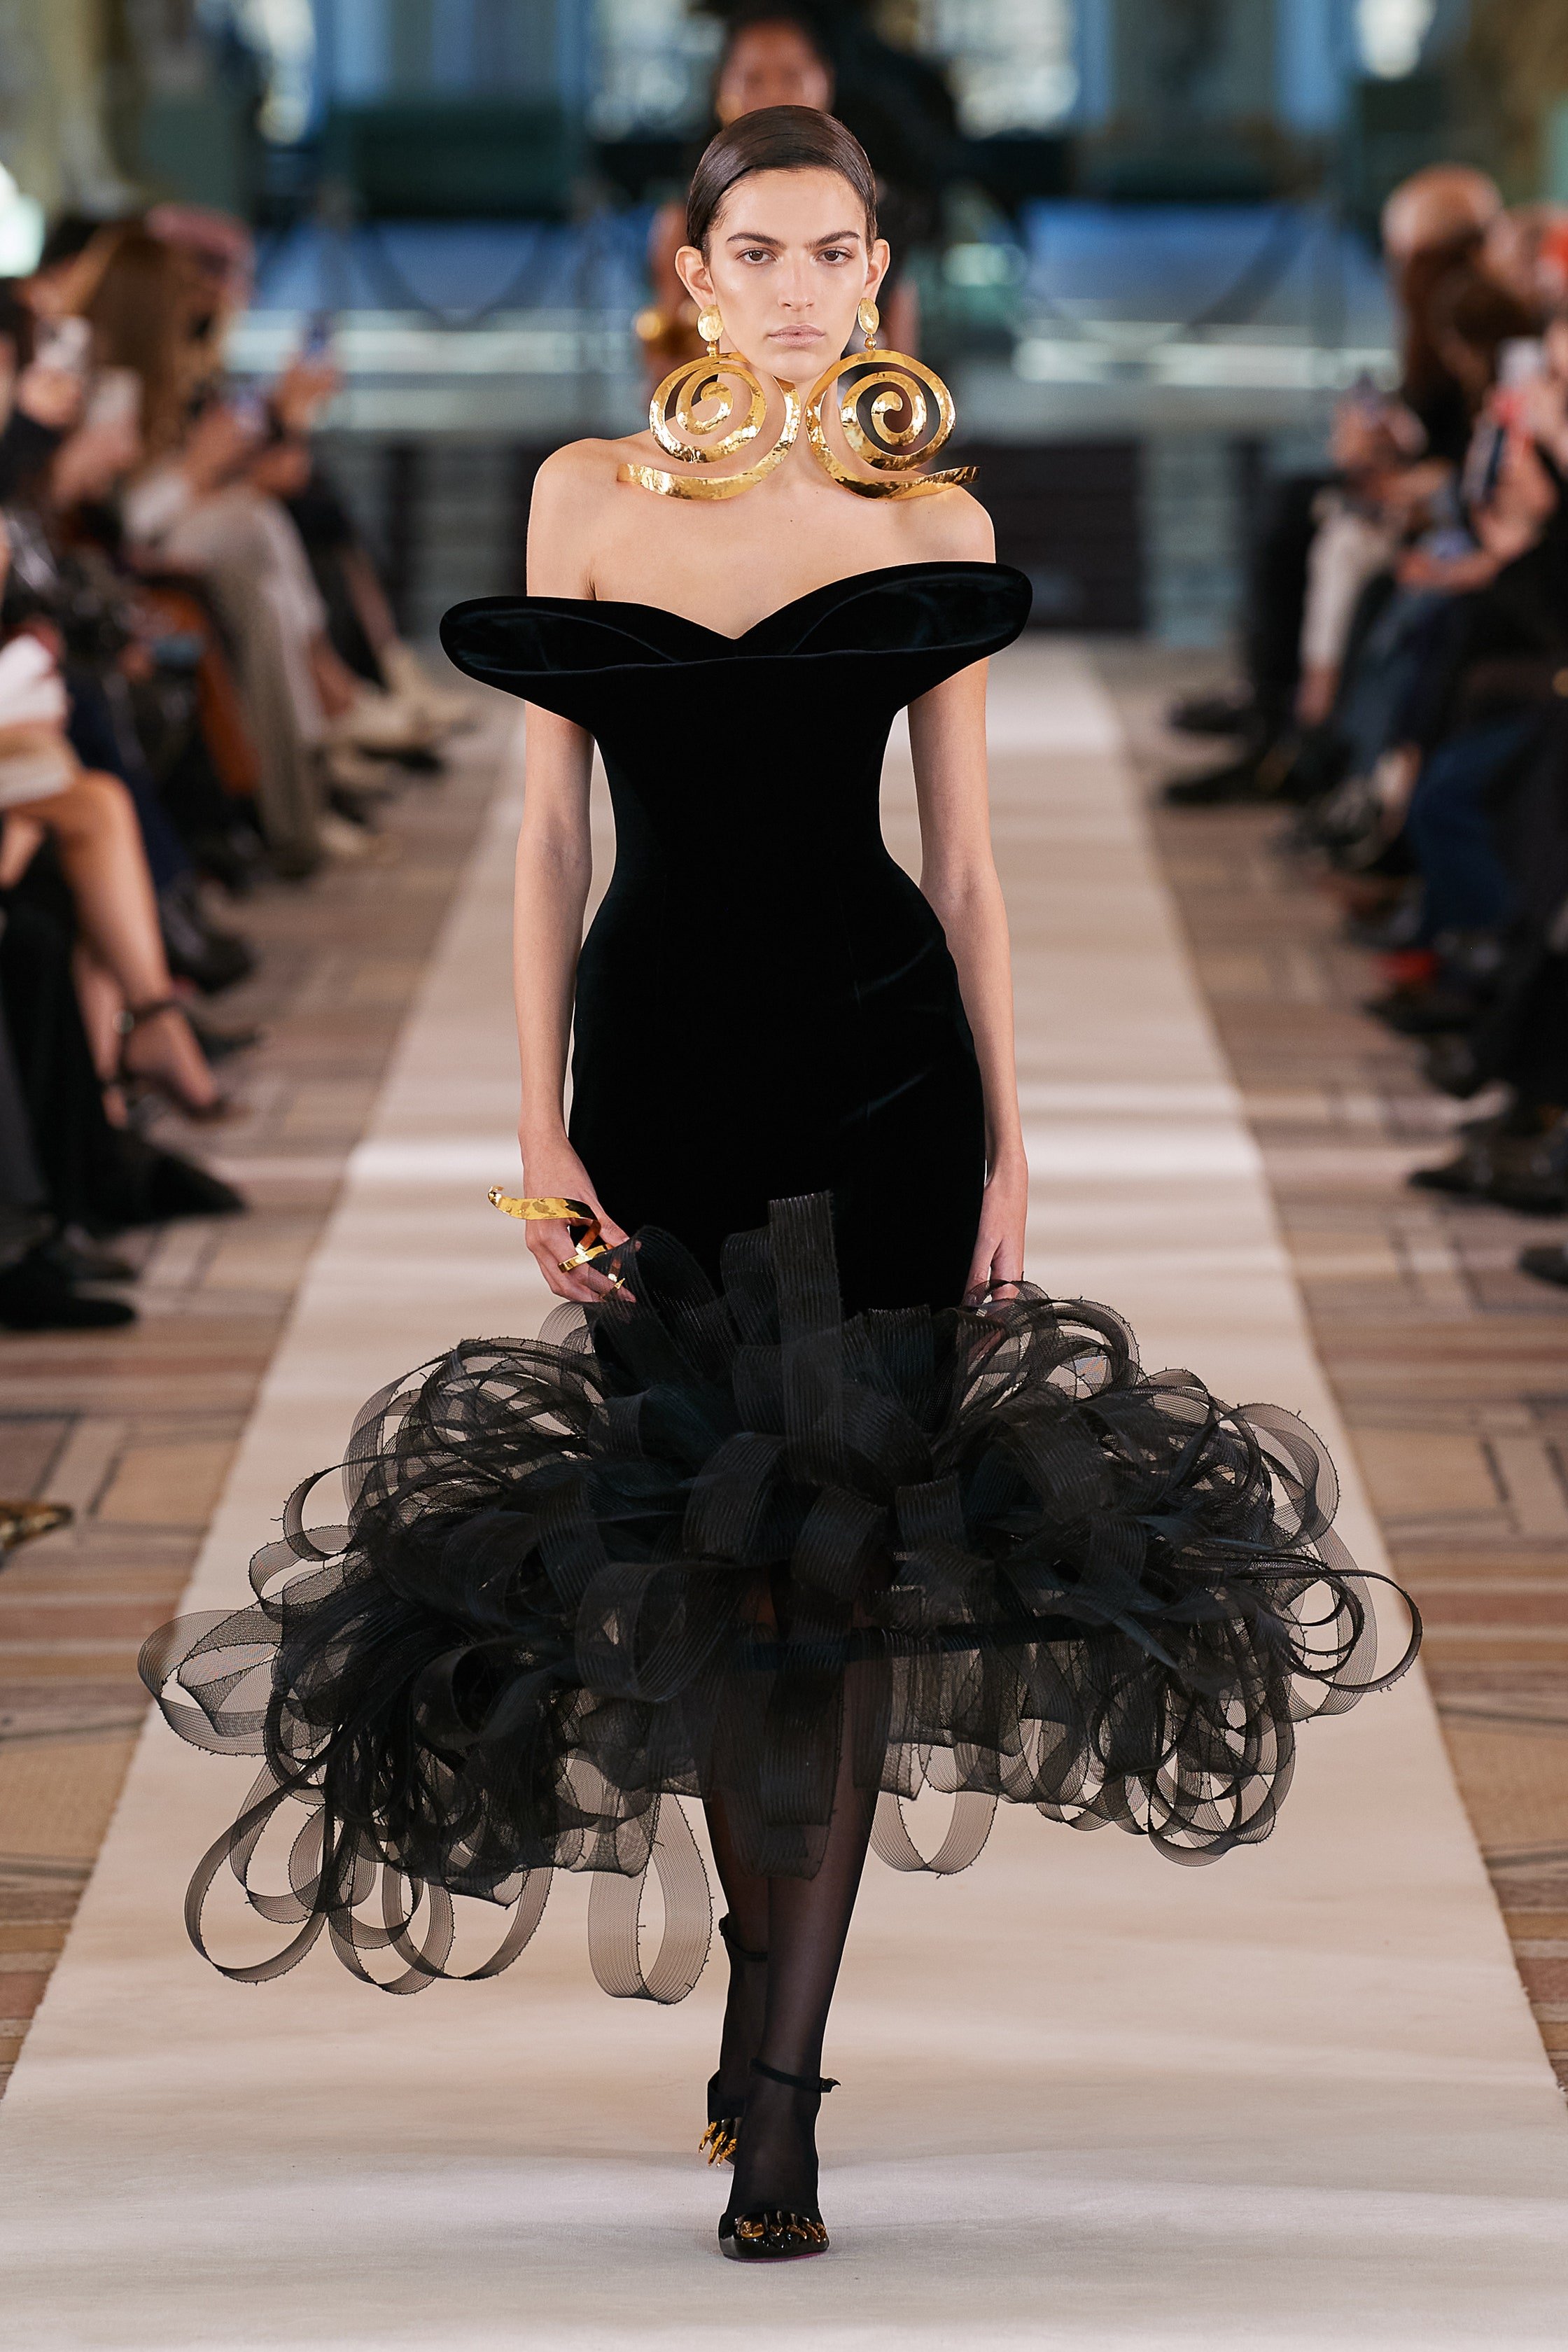 00025-Schiaparelli-Couture-Spring-22-credit-Gorunway.jpeg